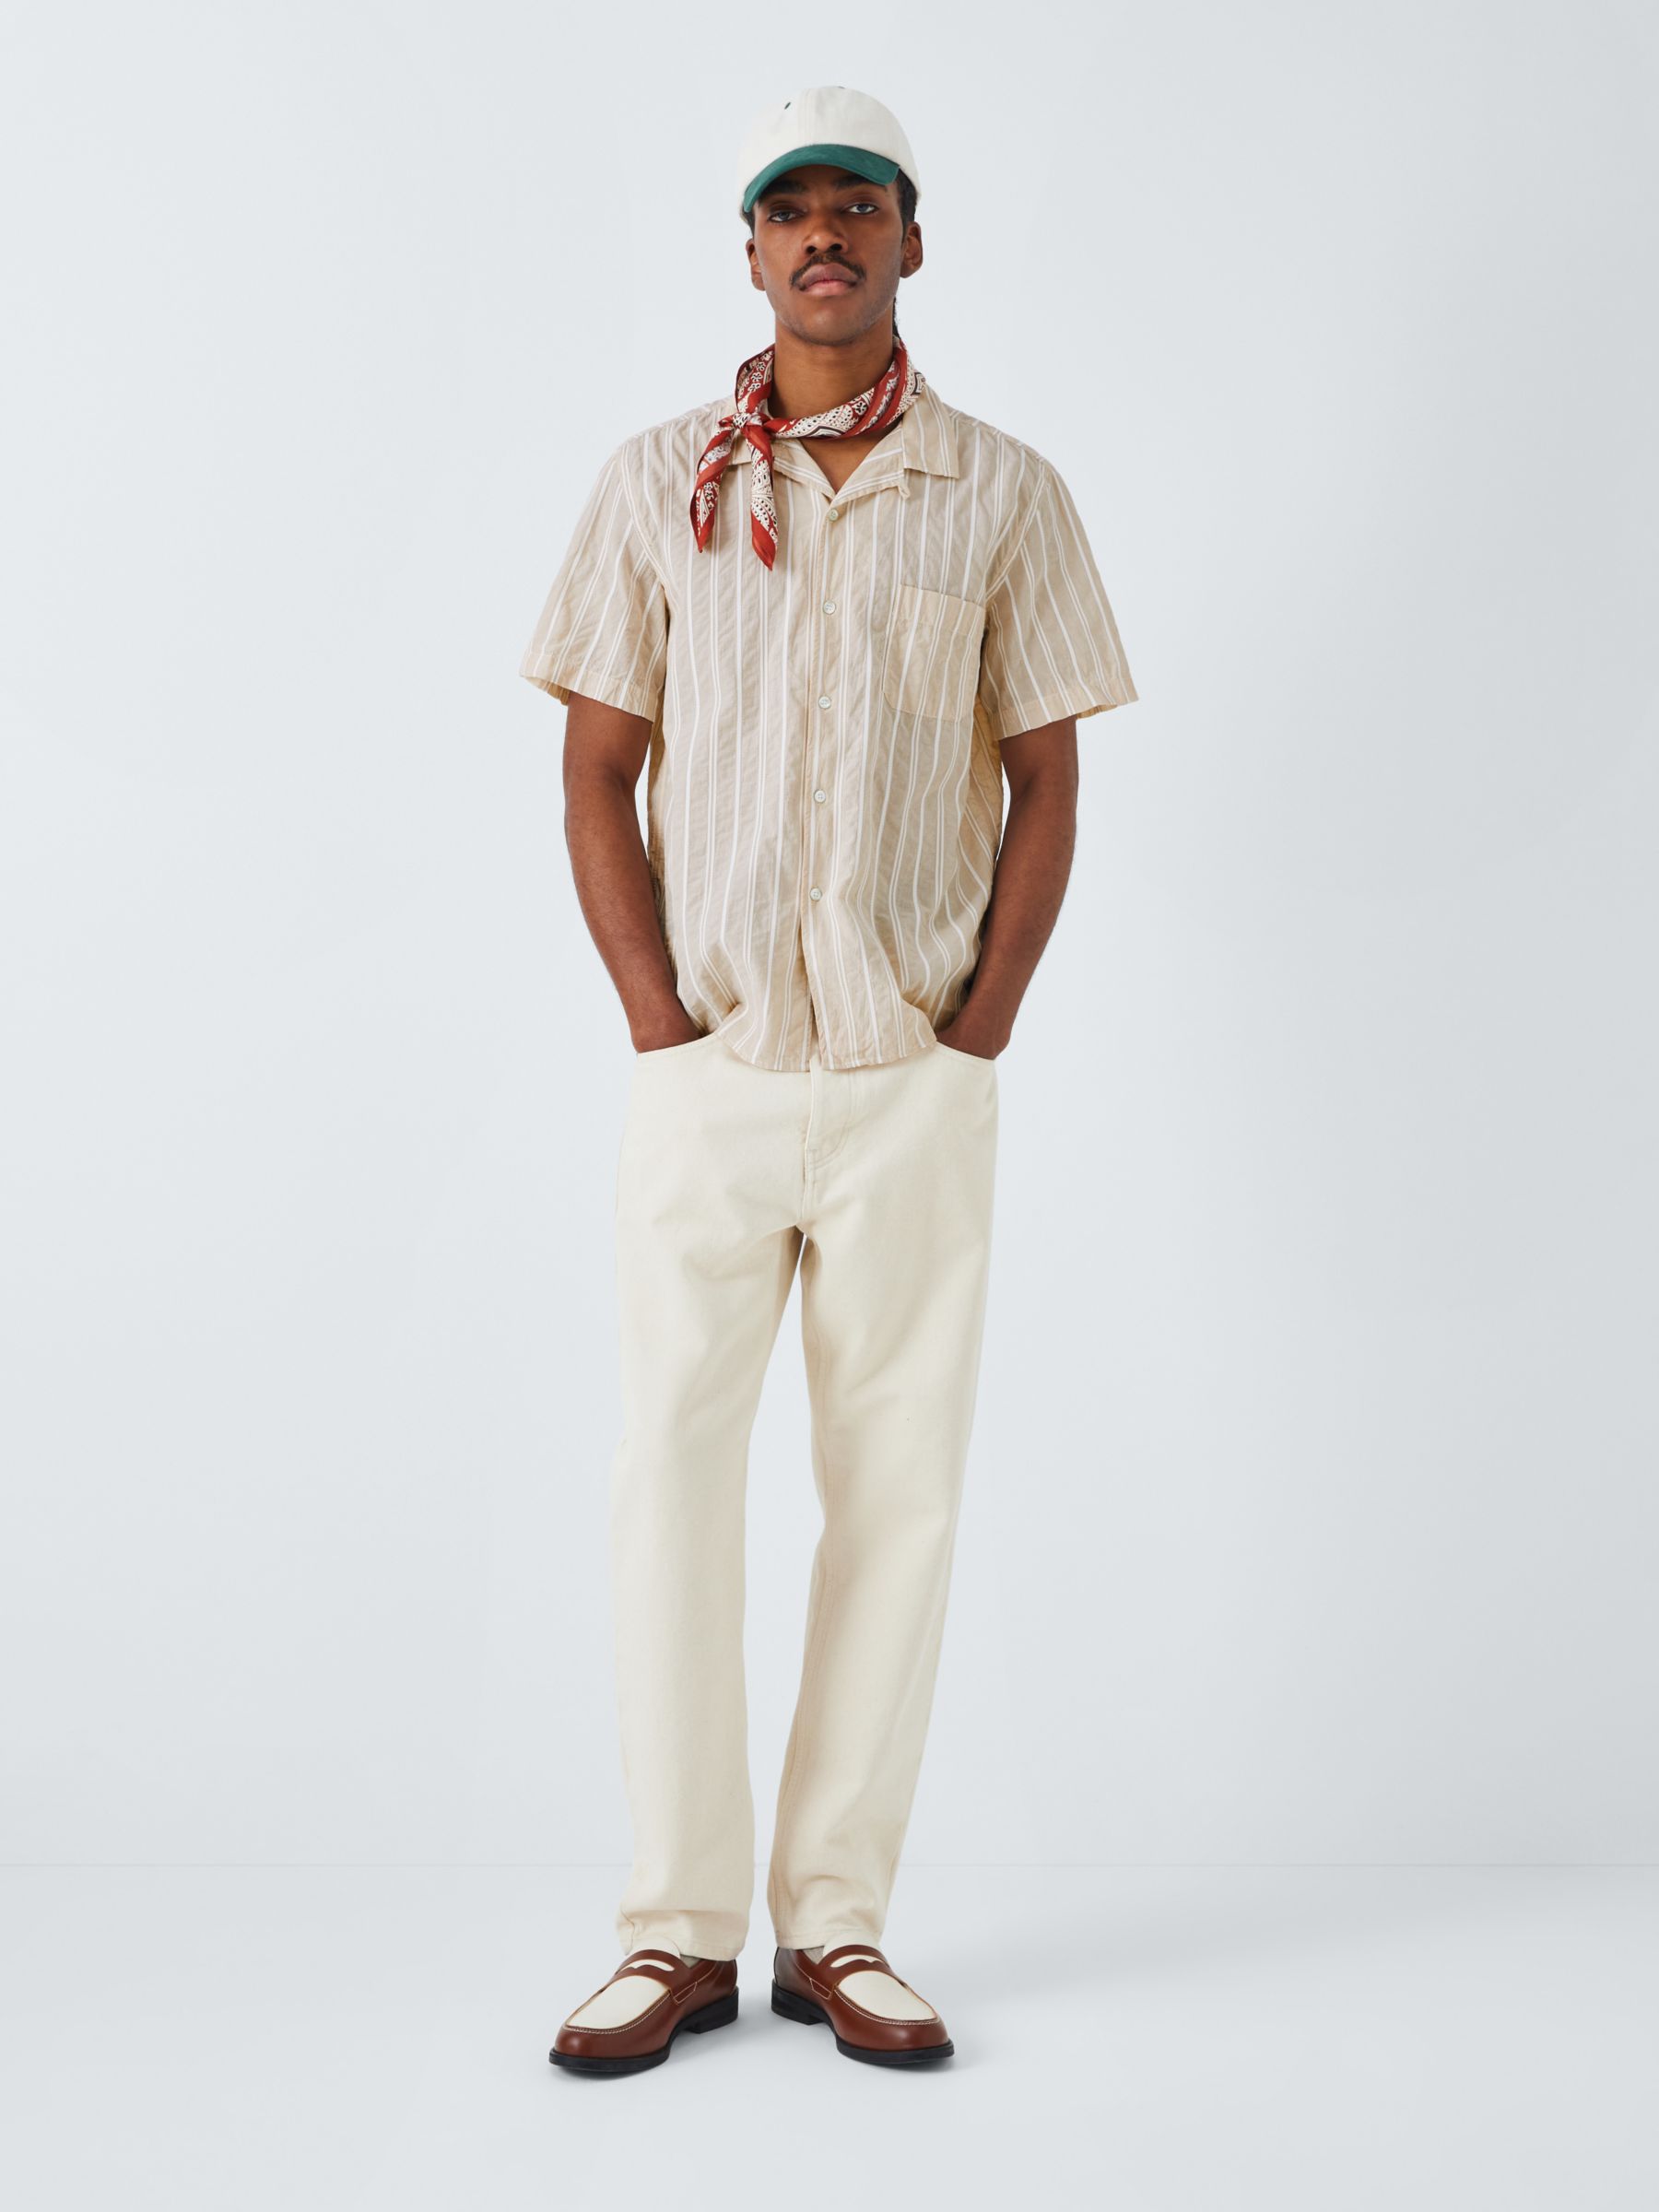 La Paz Cotton Panama Stripe Shirt, Sand Rope, S